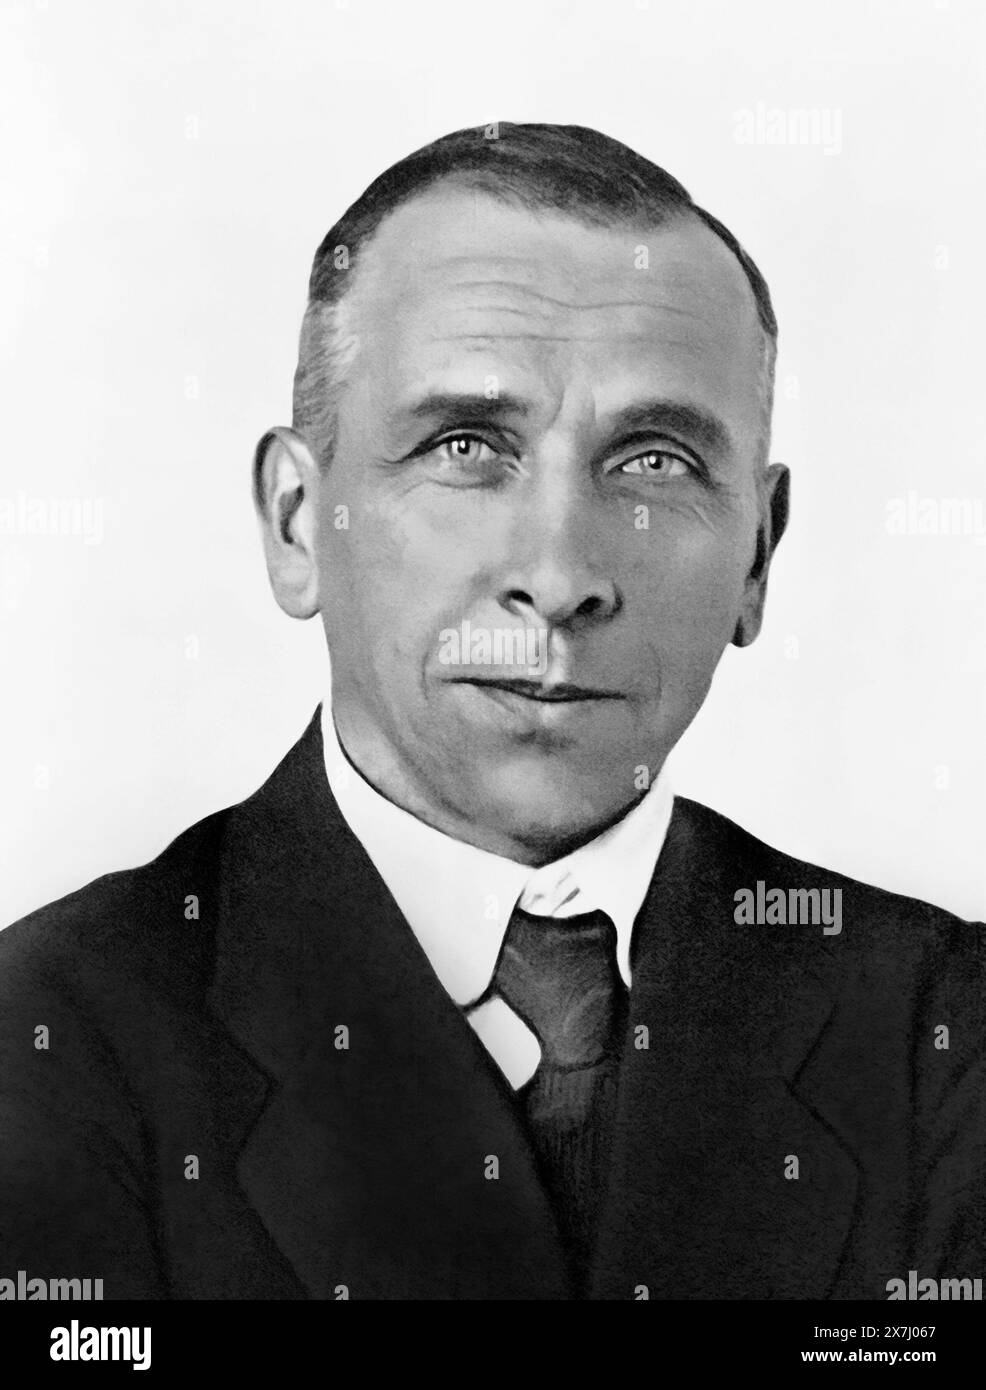 Alfred Wegener. Portrait du géophysicien et météorologue allemand, Alfred Lothar Wegener (1880-1930), vers 1924 Banque D'Images